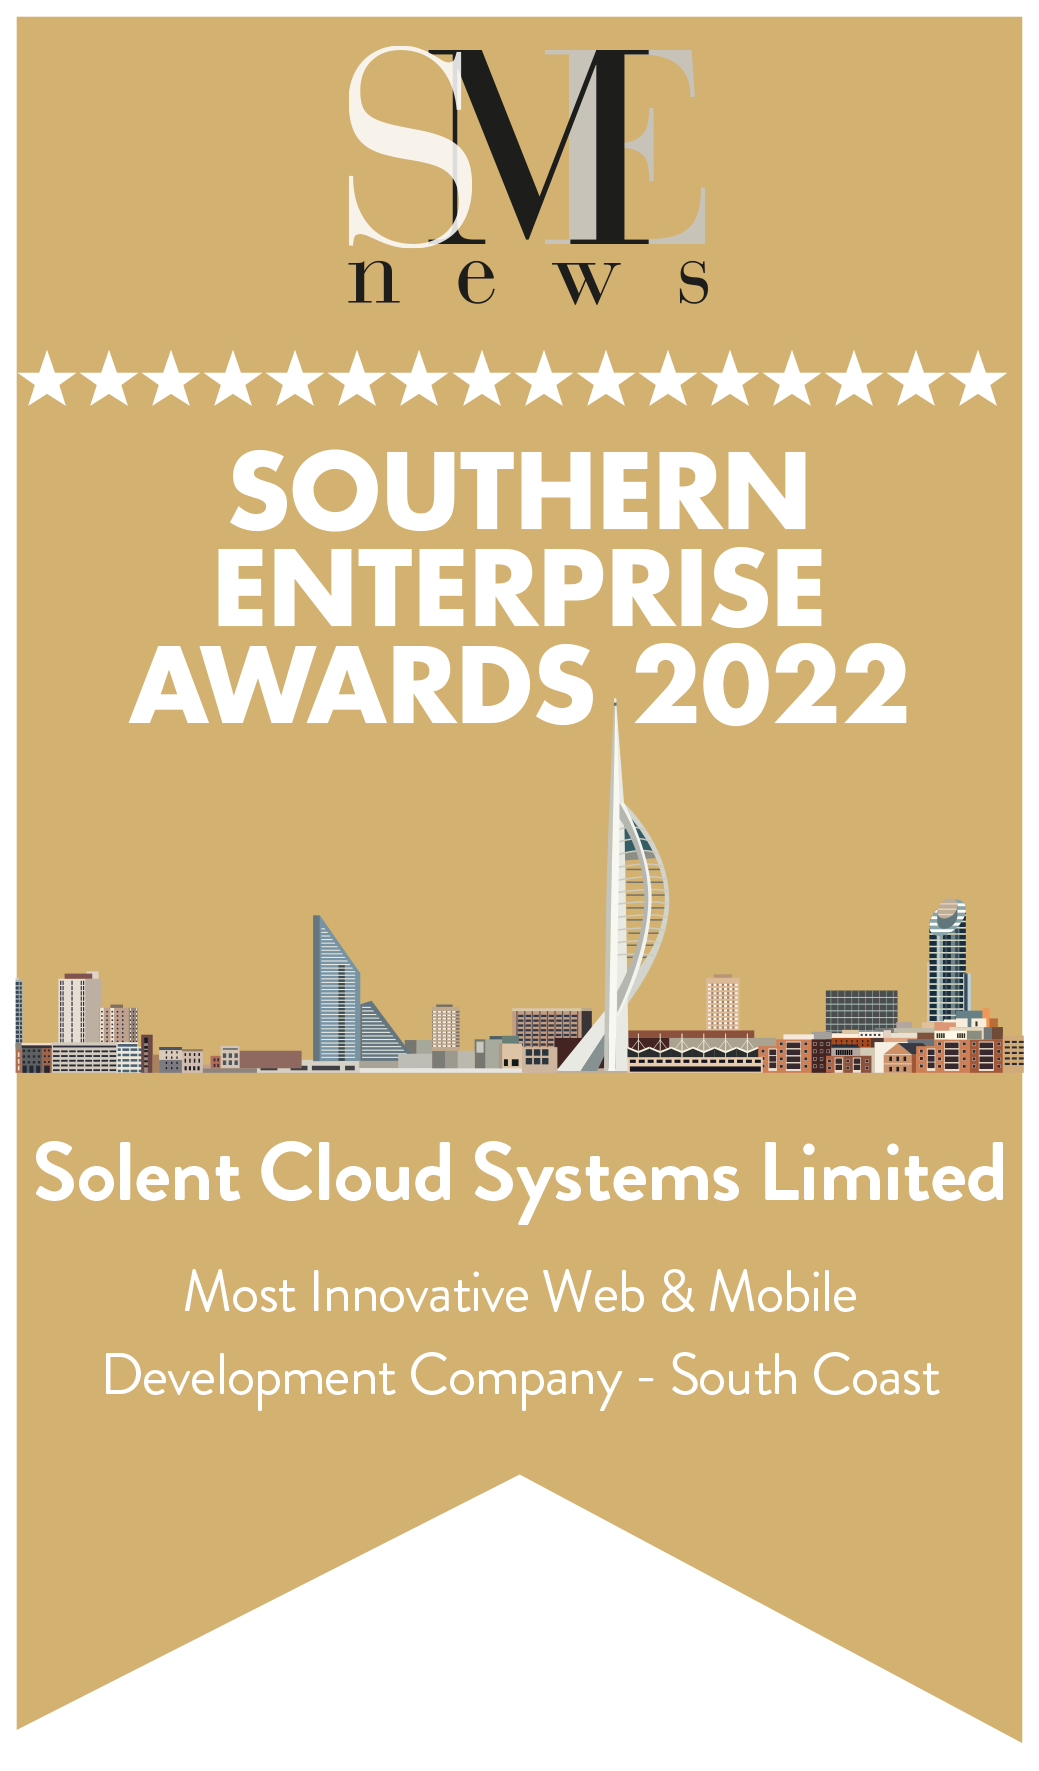 SME News Southern Enterprise Awards 2022